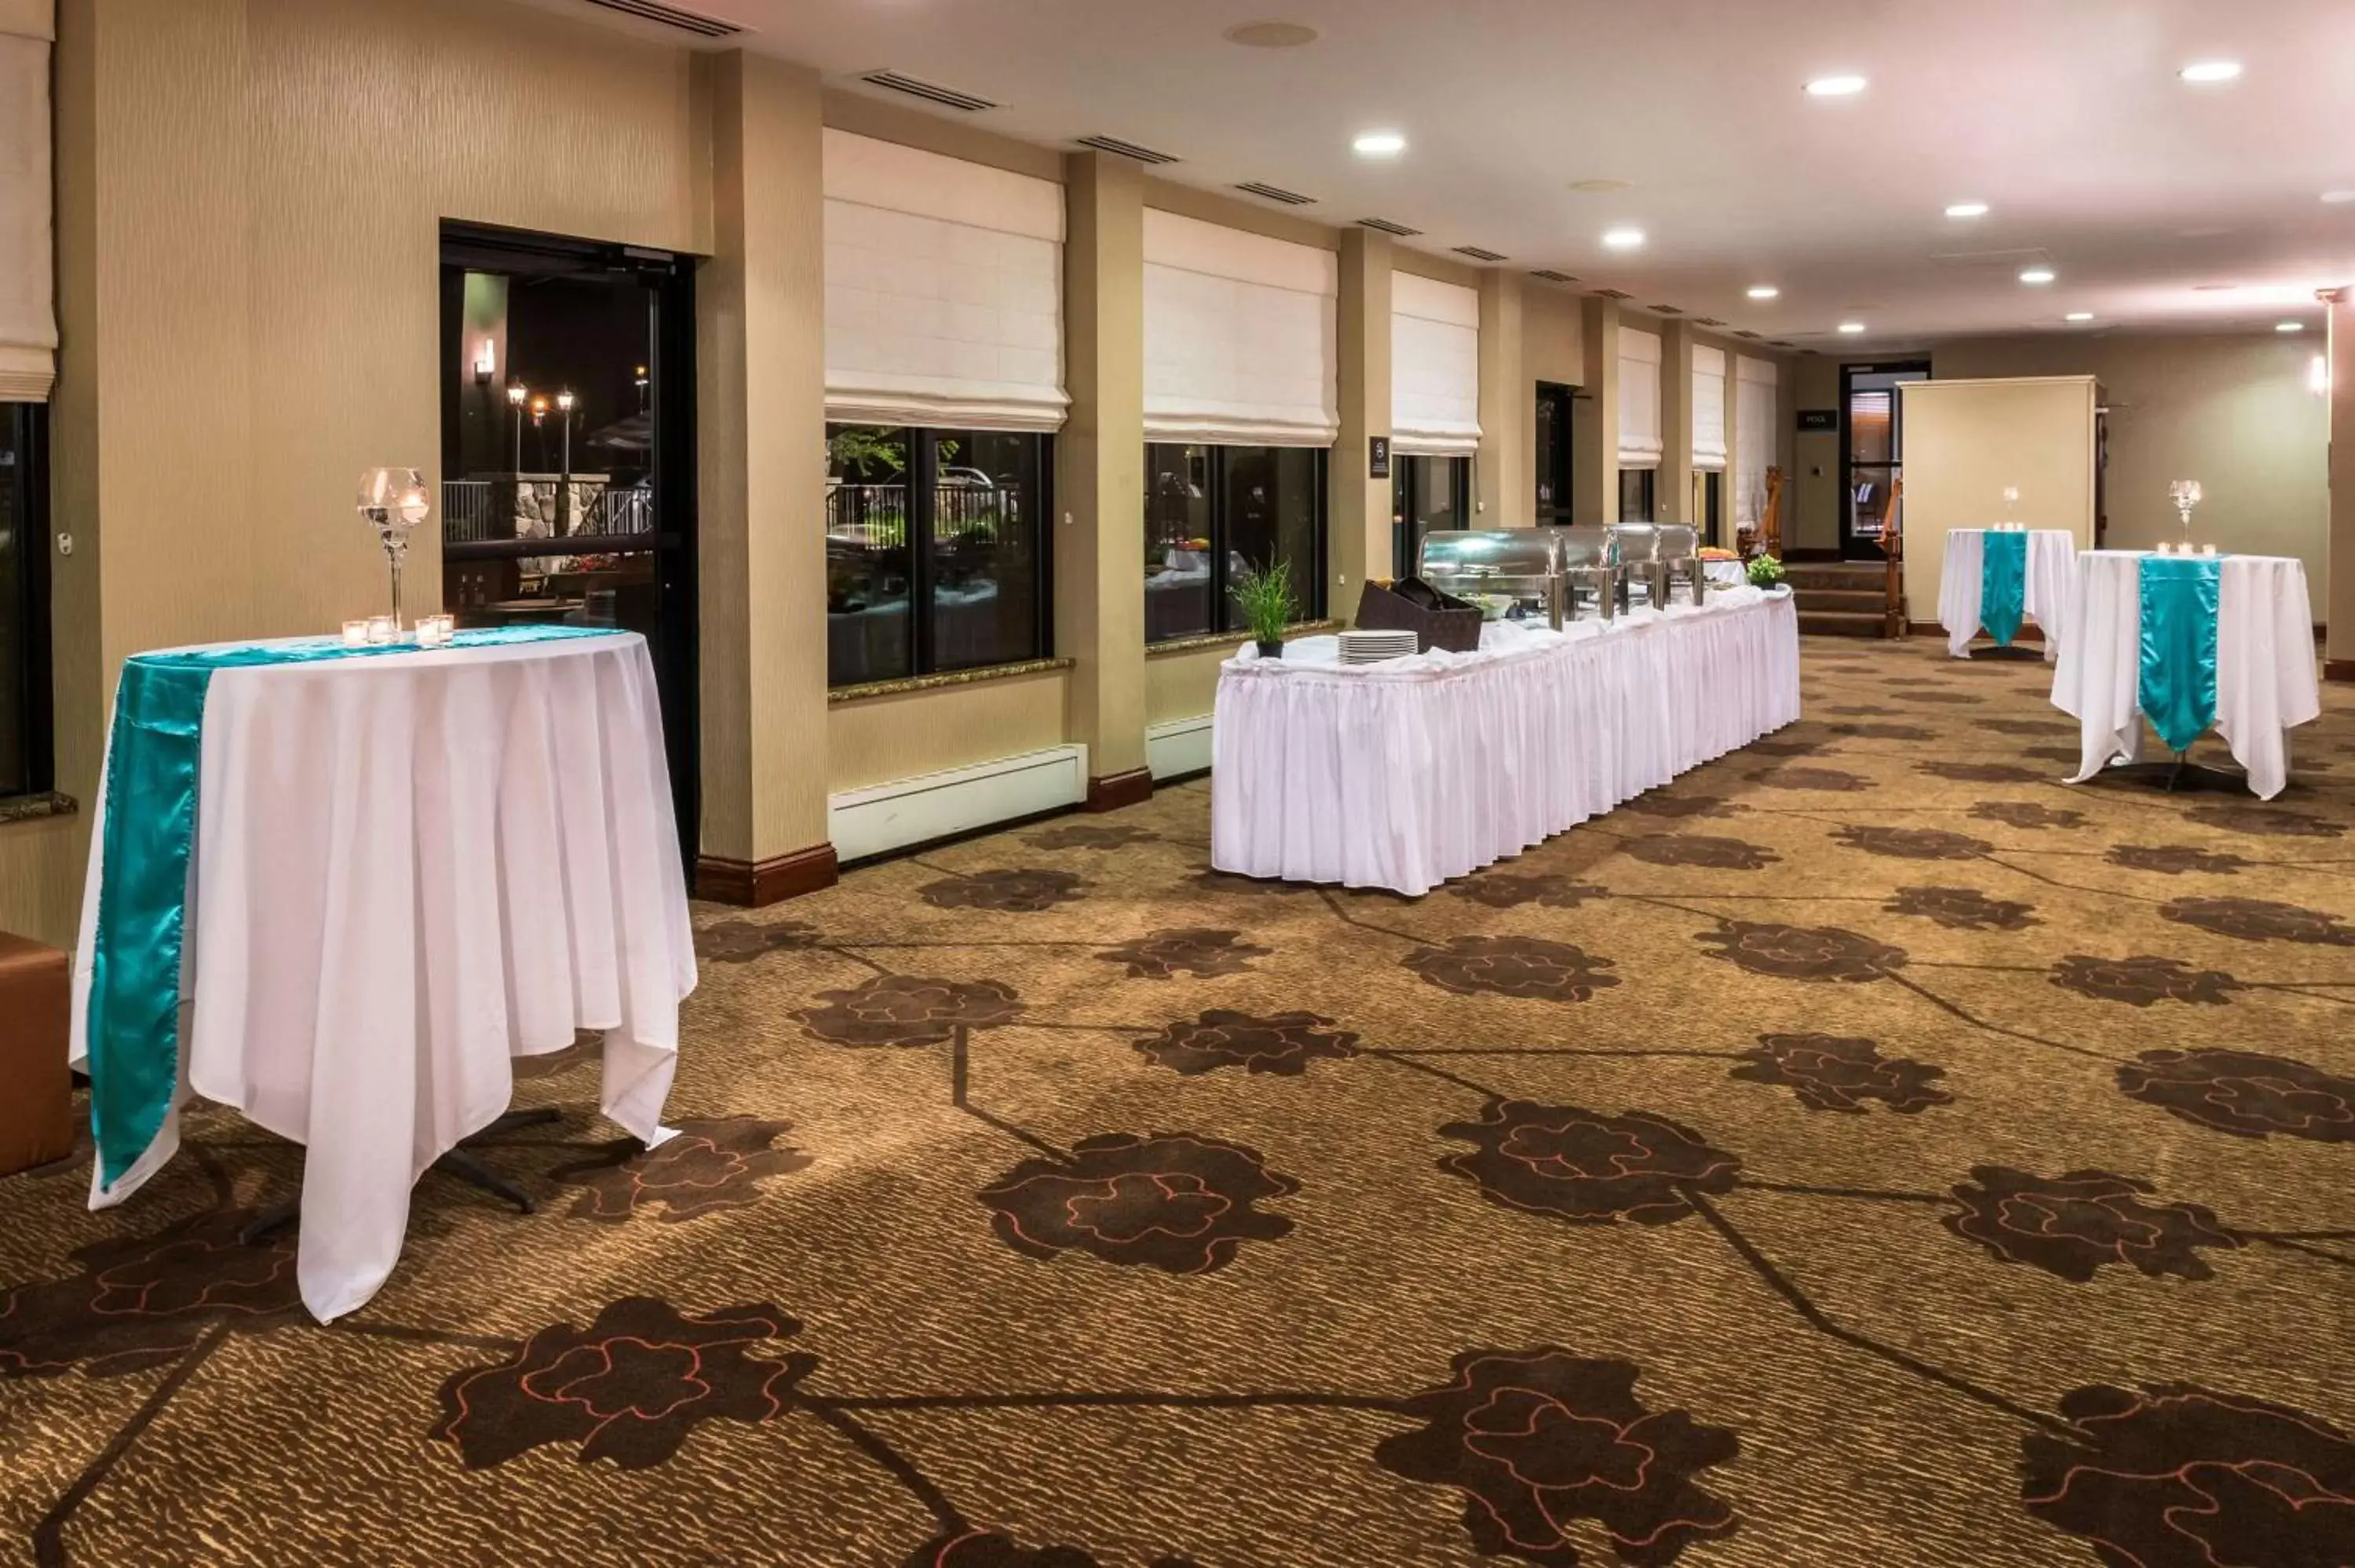 Meeting/conference room, Banquet Facilities in Hilton Garden Inn Detroit Southfield